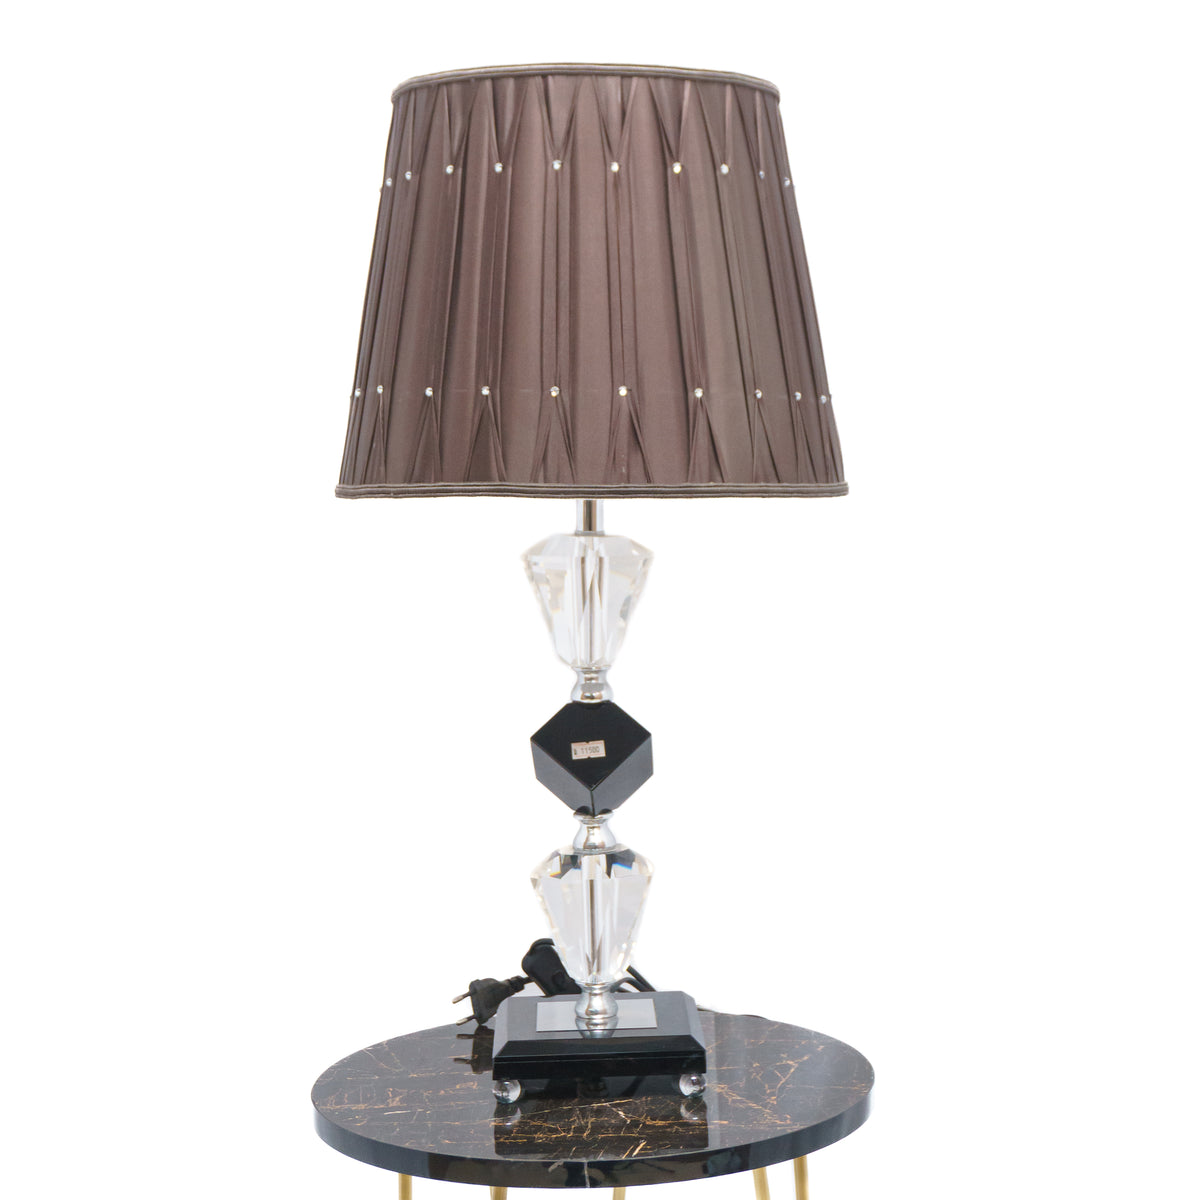 Sleek and Stylish Table Lamp: The Epitome of Elegance